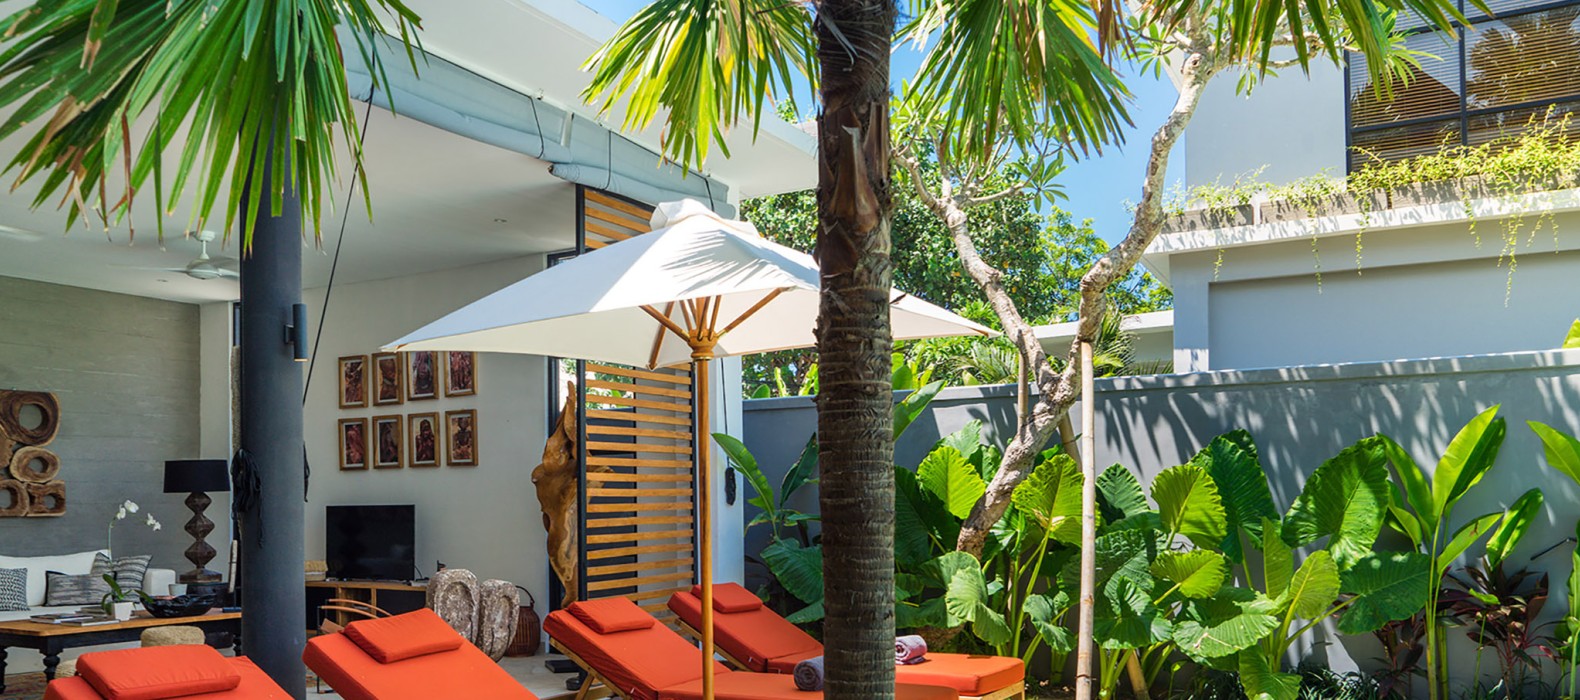 Sun loungers of Villa Paradise Garden in Bali